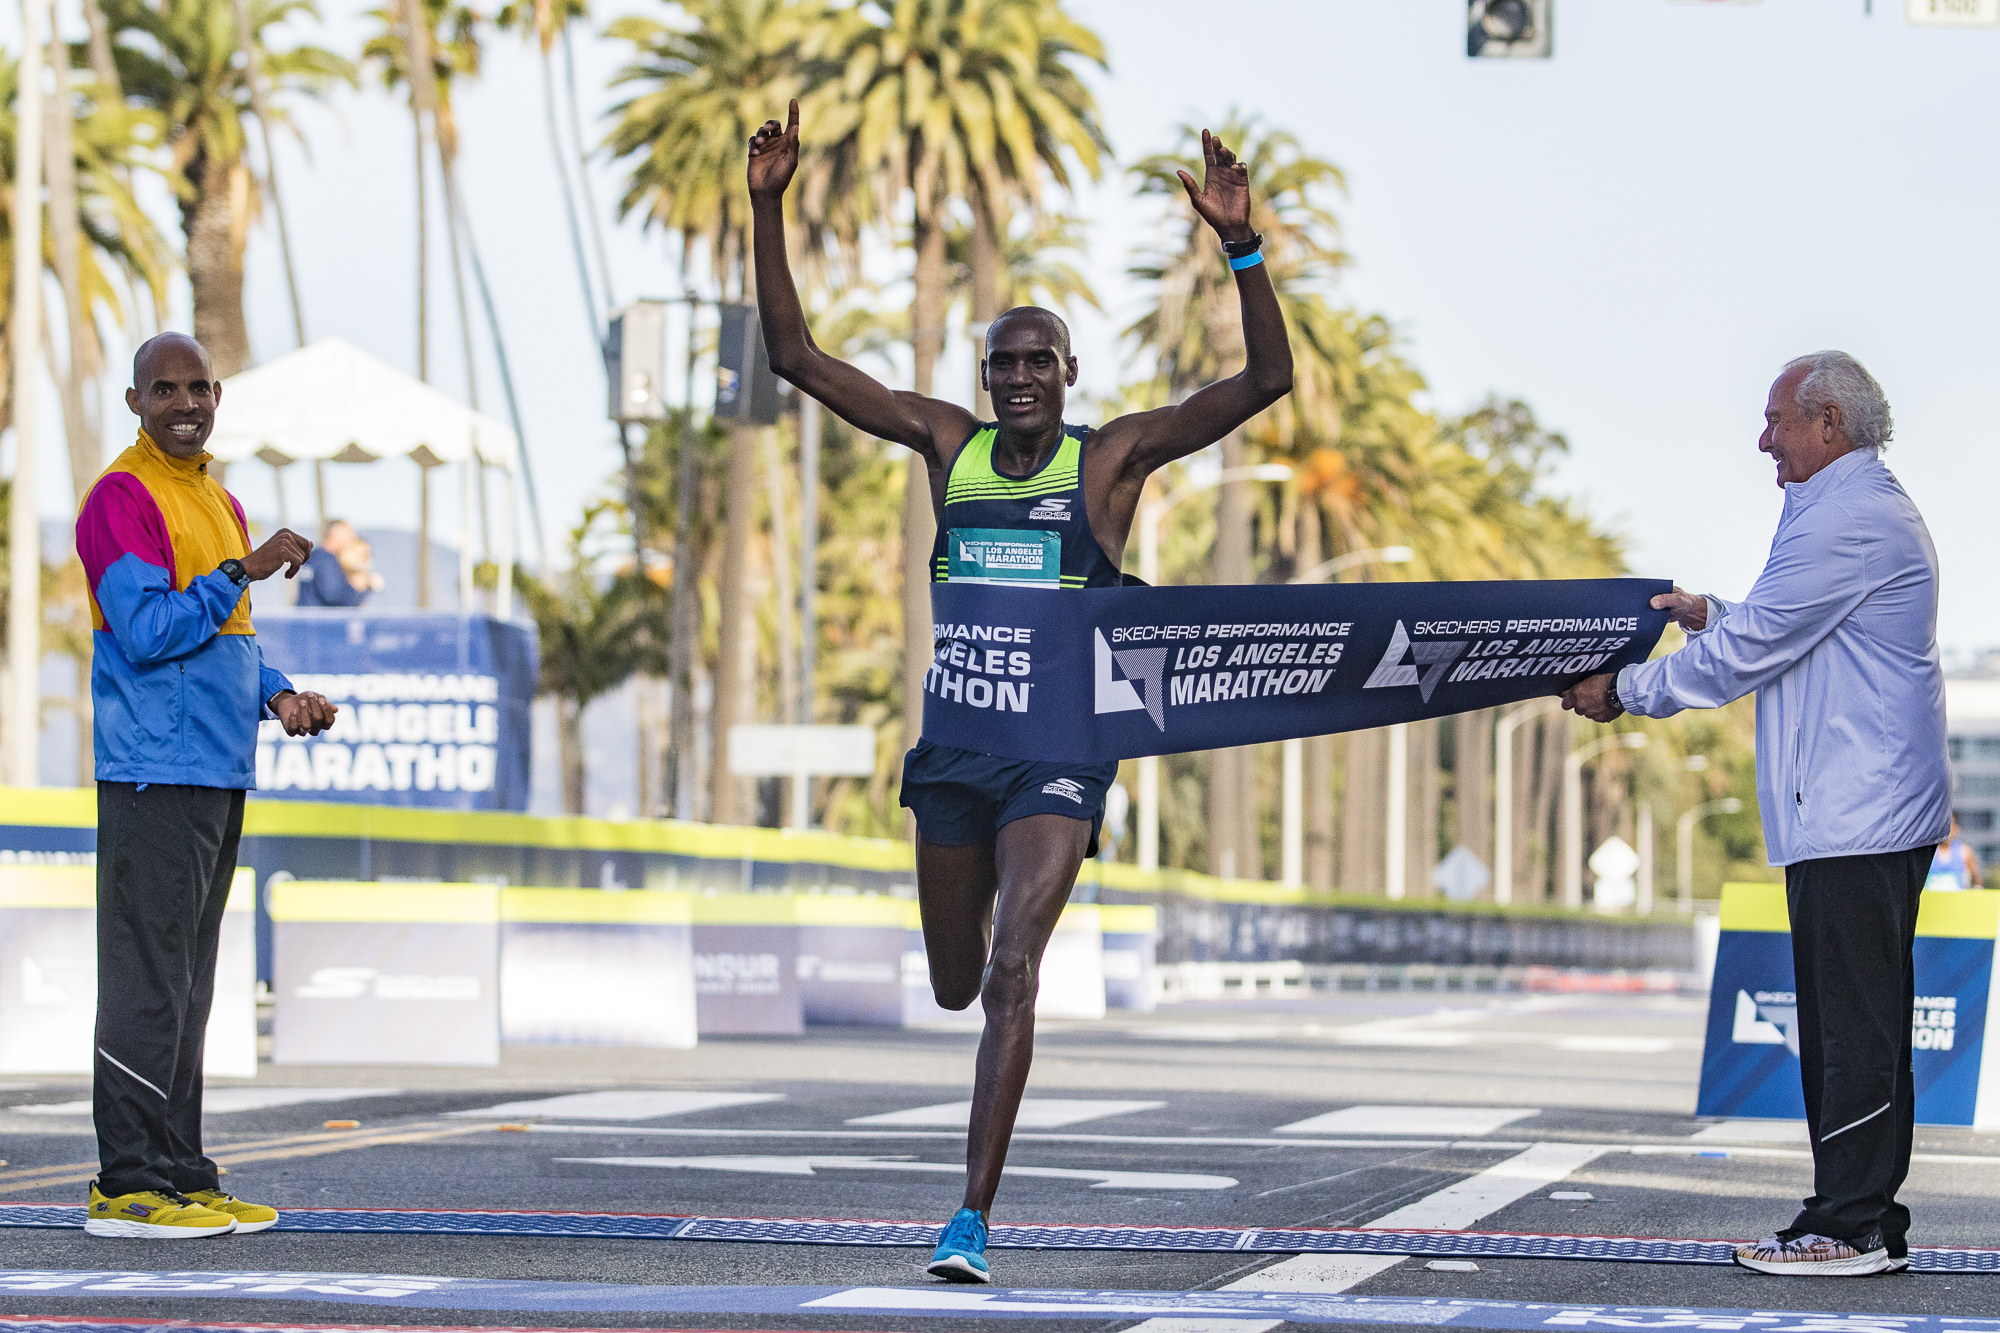  Weldon Kirui (middle) wins the Los Angeles Marathon on March 18, 2018 in Santa Monica, California with a time of 2:11:48. Kirui has won 2 out of the last 3 Los Angeles Marathons. (Zane Meyer-Thornton/Corsair Photo) 